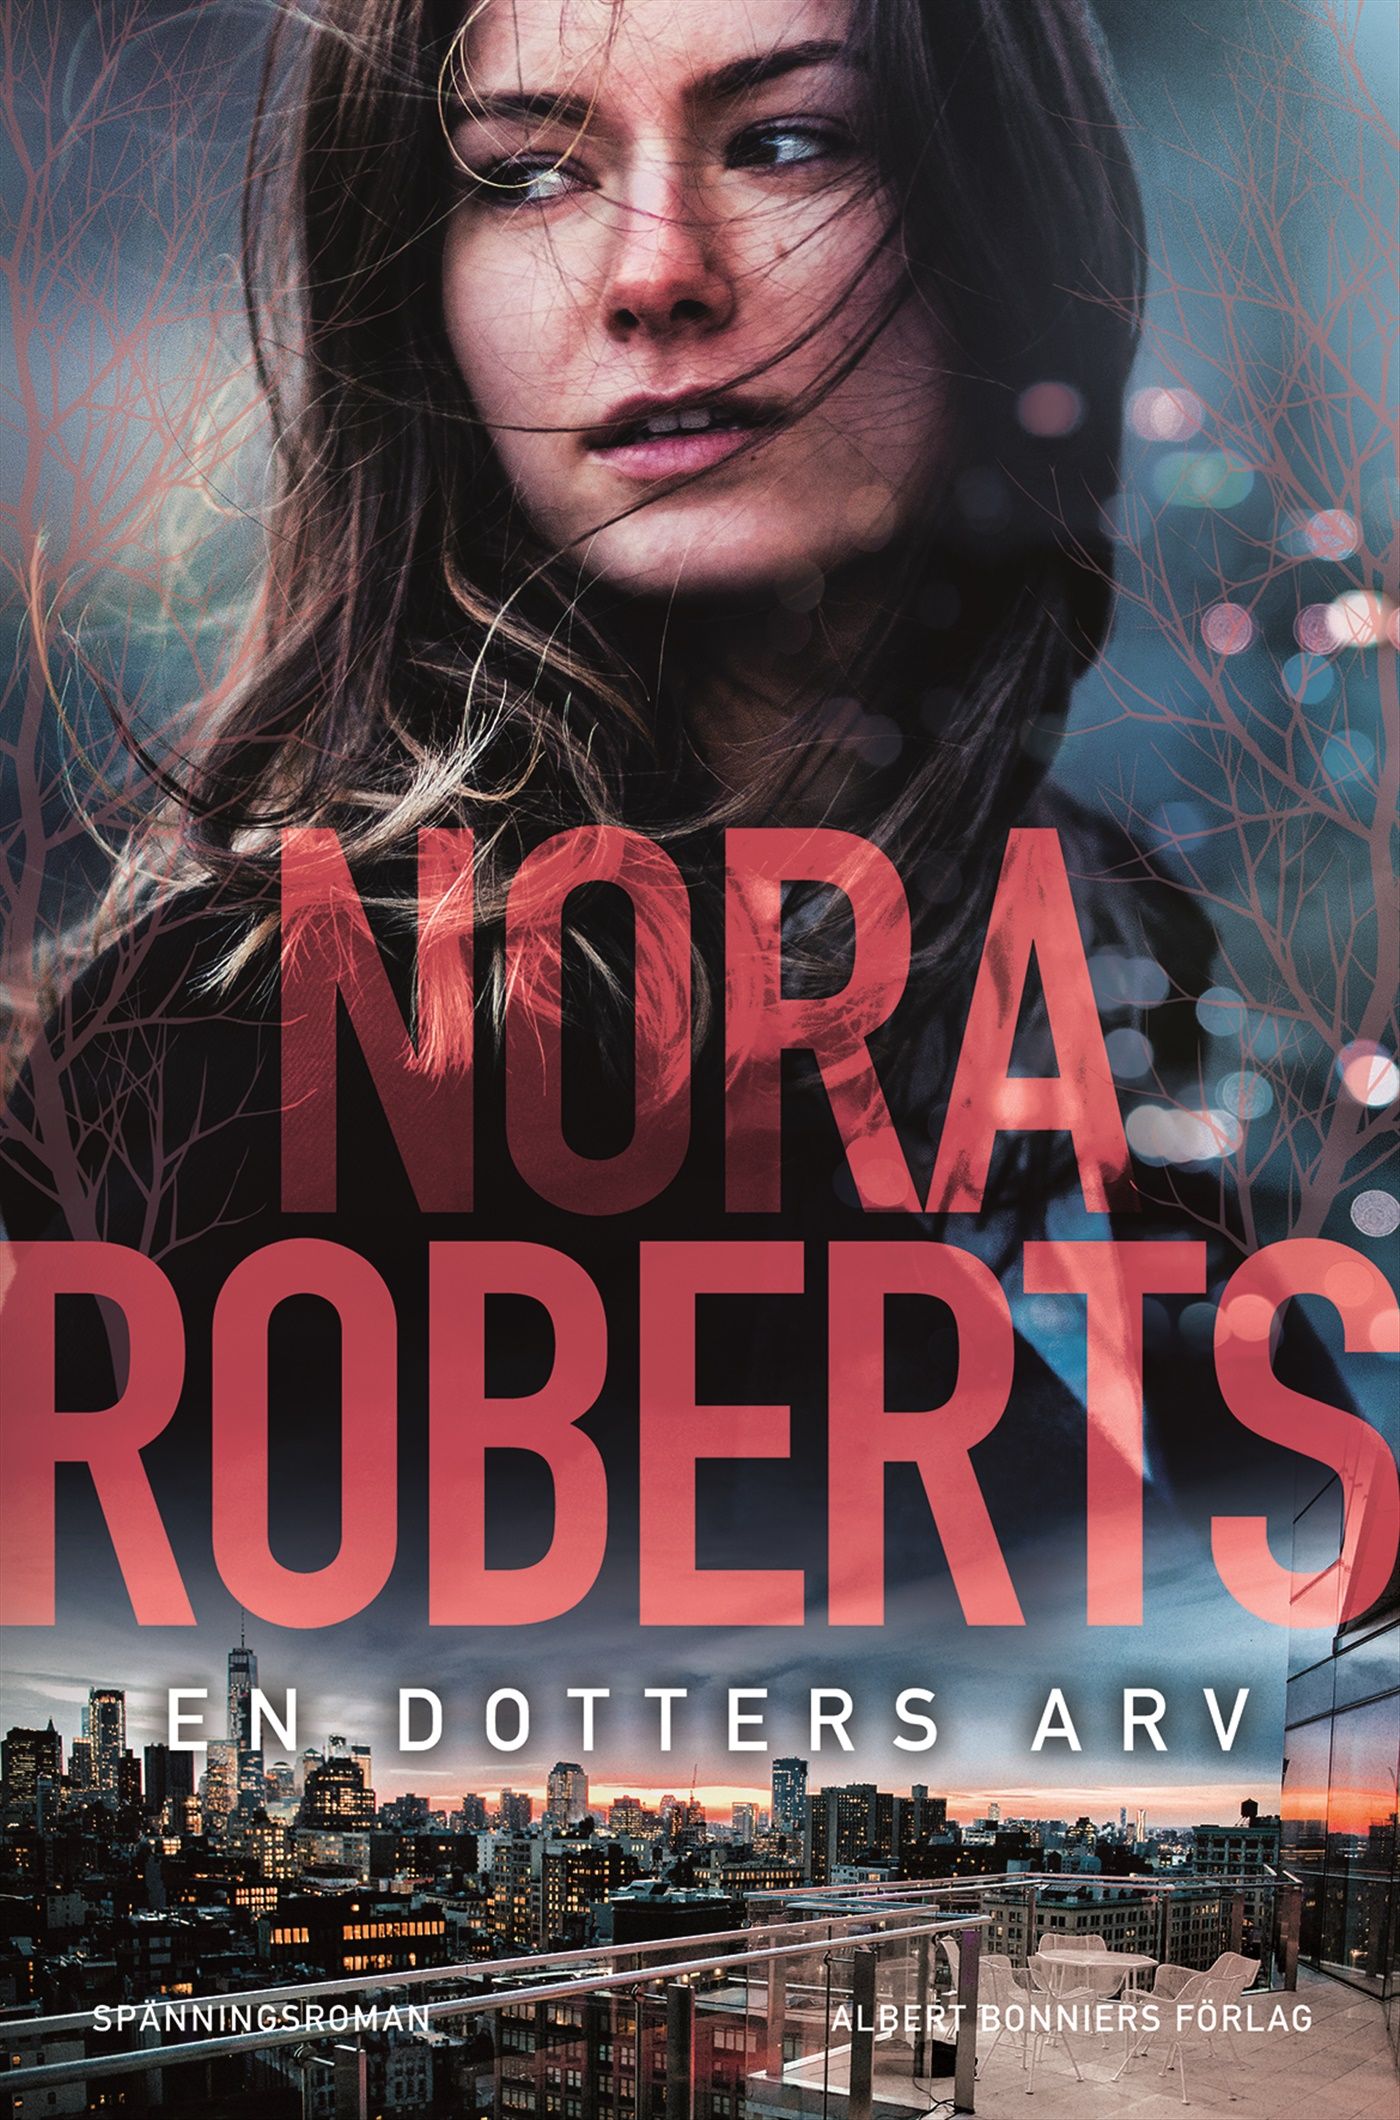 En dotters arv, eBook by Nora Roberts